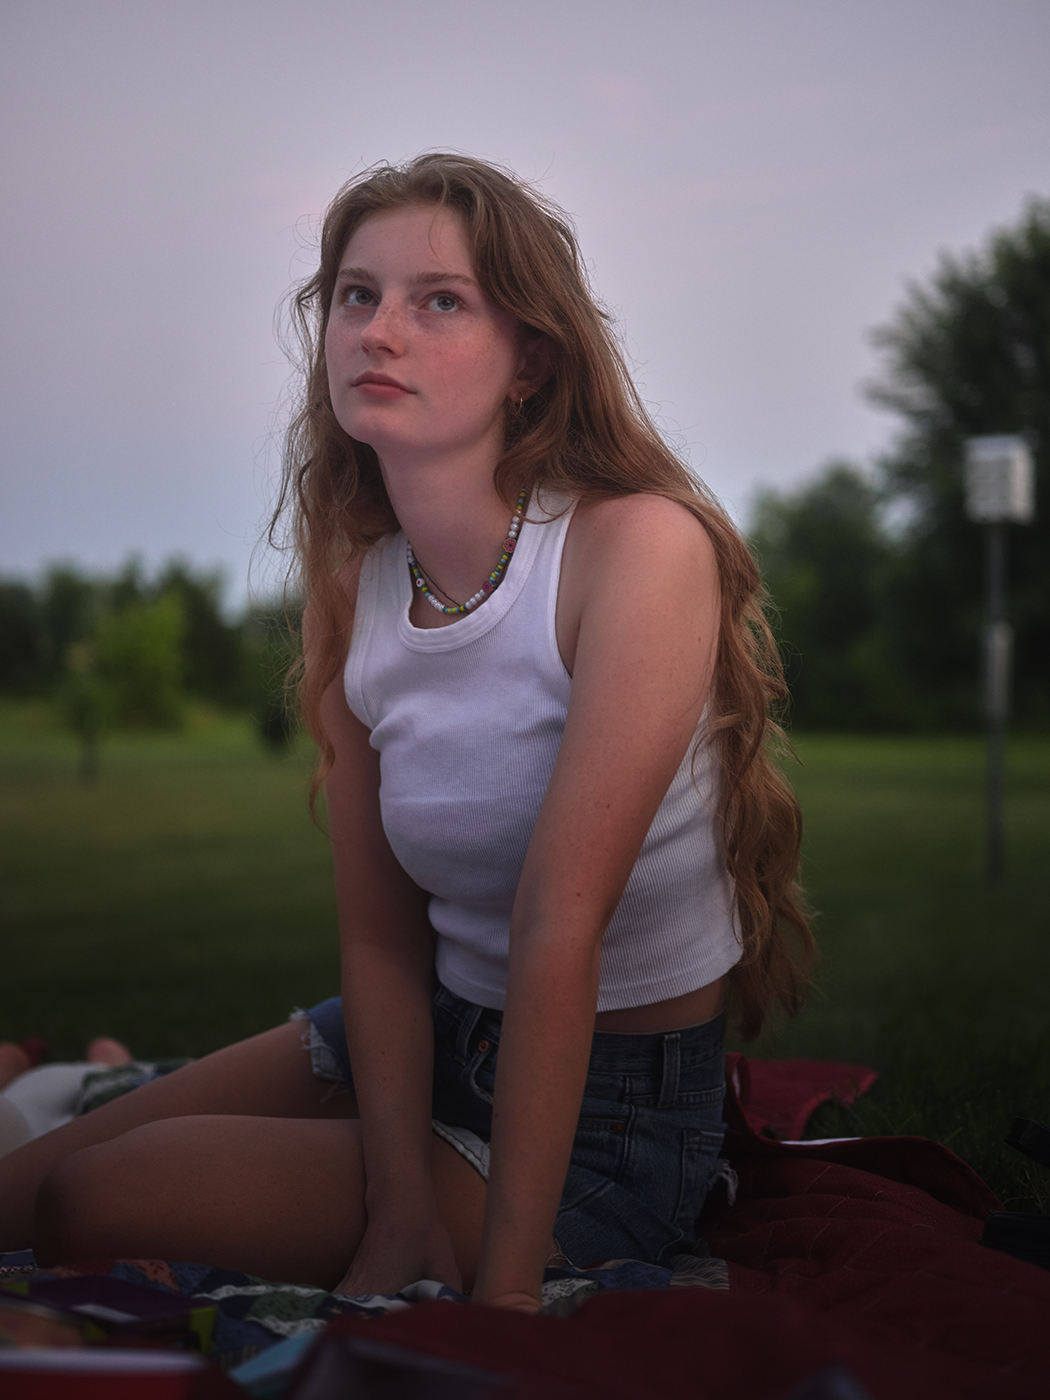 Jenna Garrett / Portraits